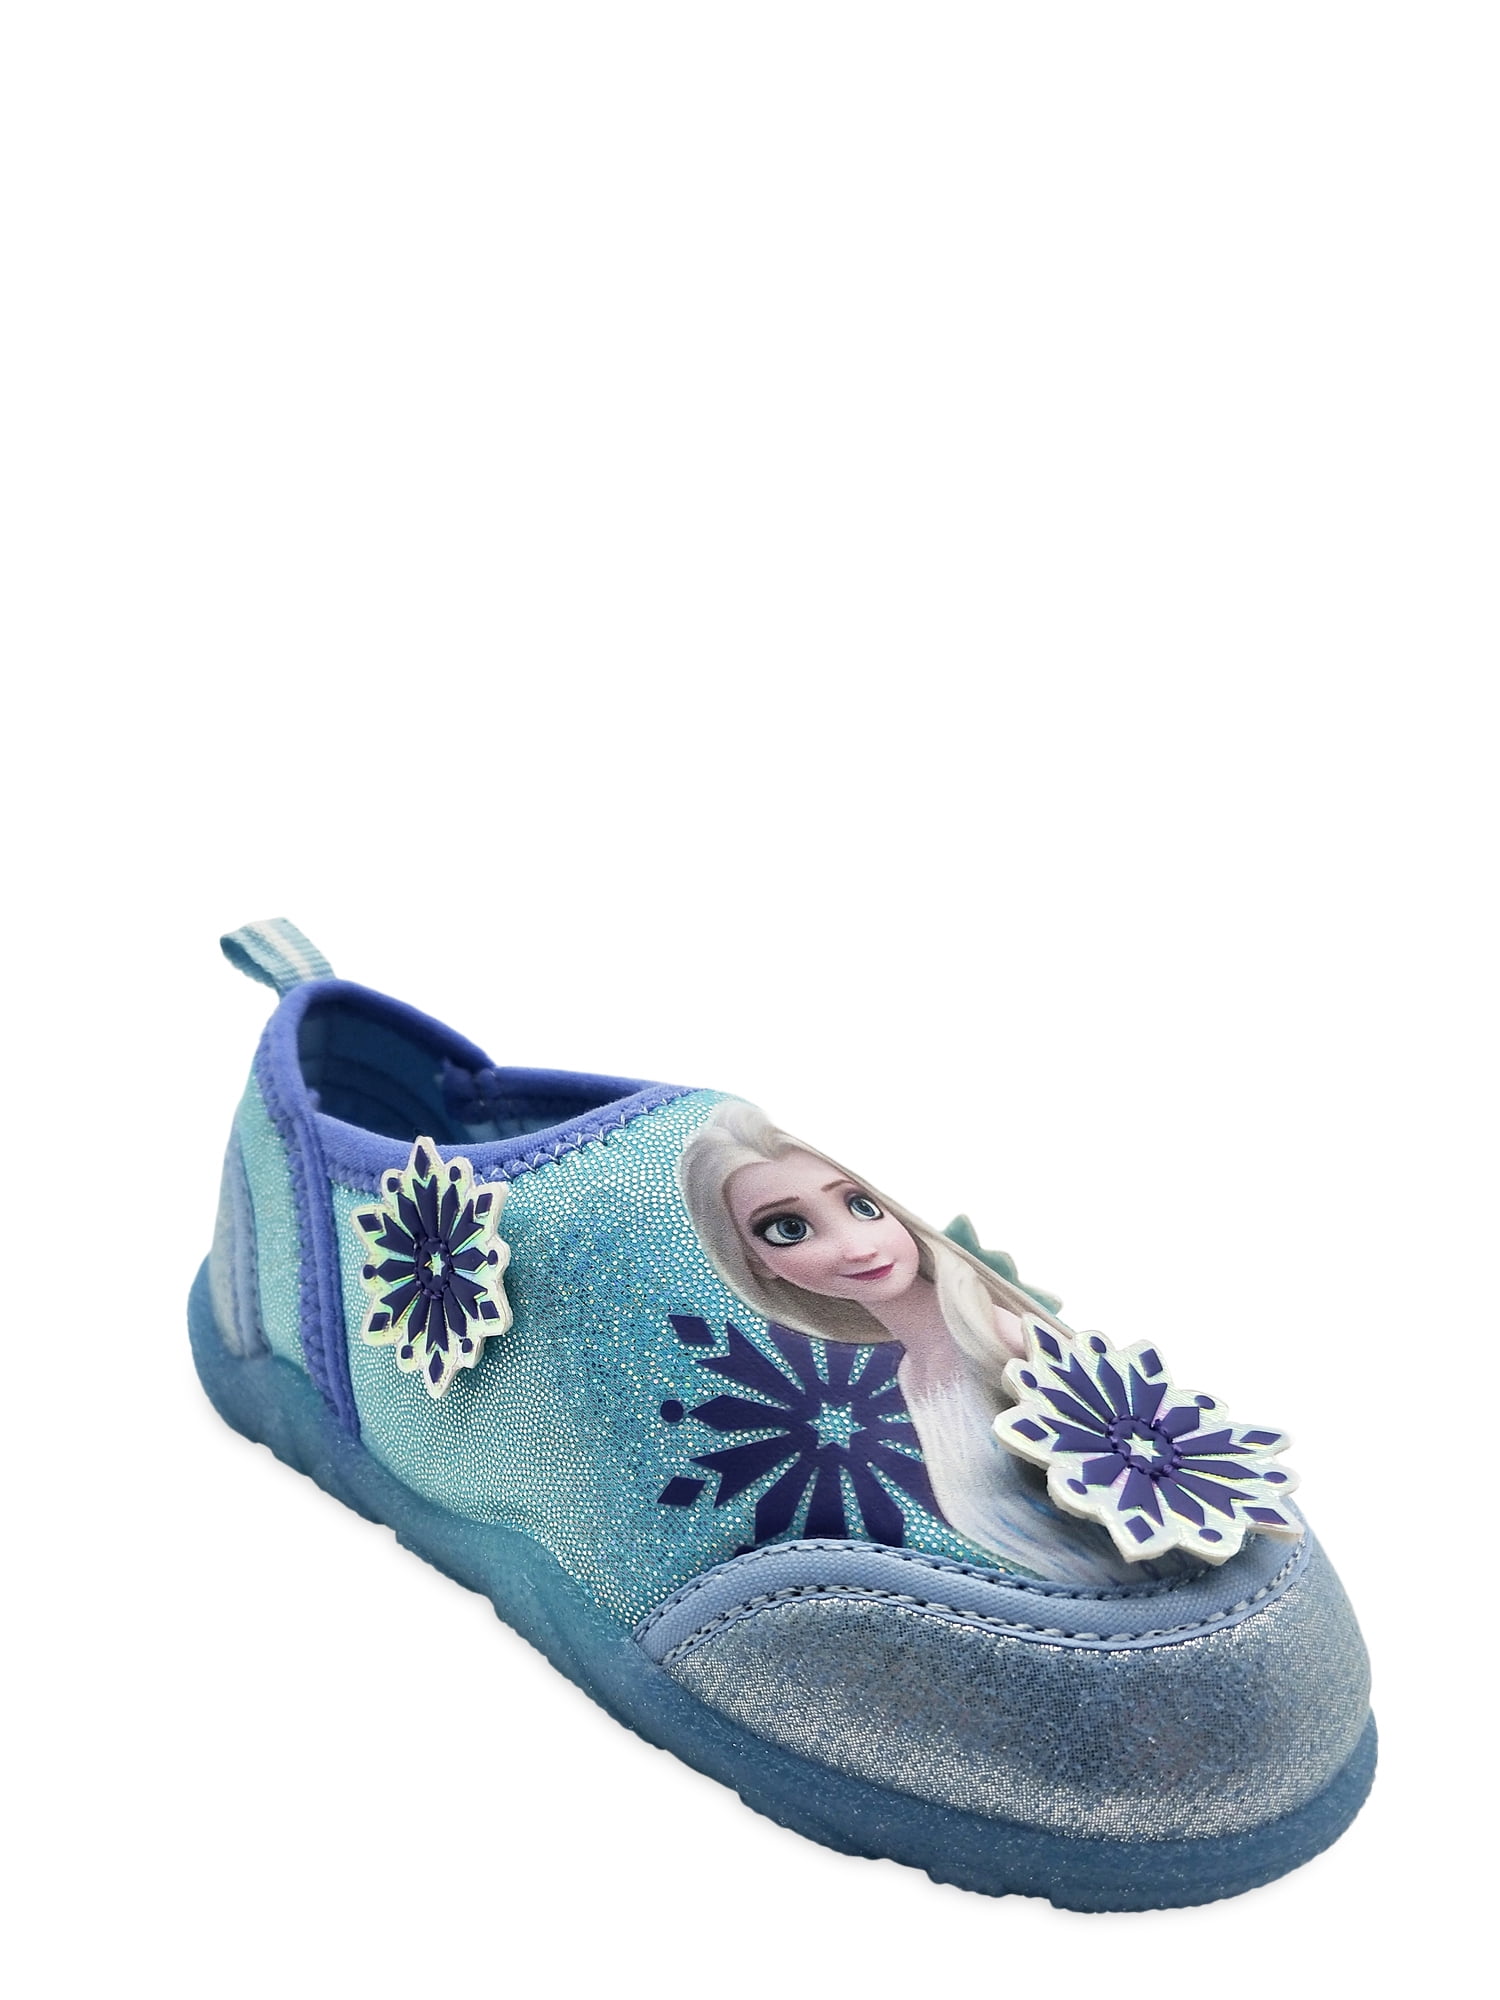 Disney FROZEN Movie Toddler Girls ANNA+ELSA Plush SLIPPERS Snowflakes Size S-M-L 